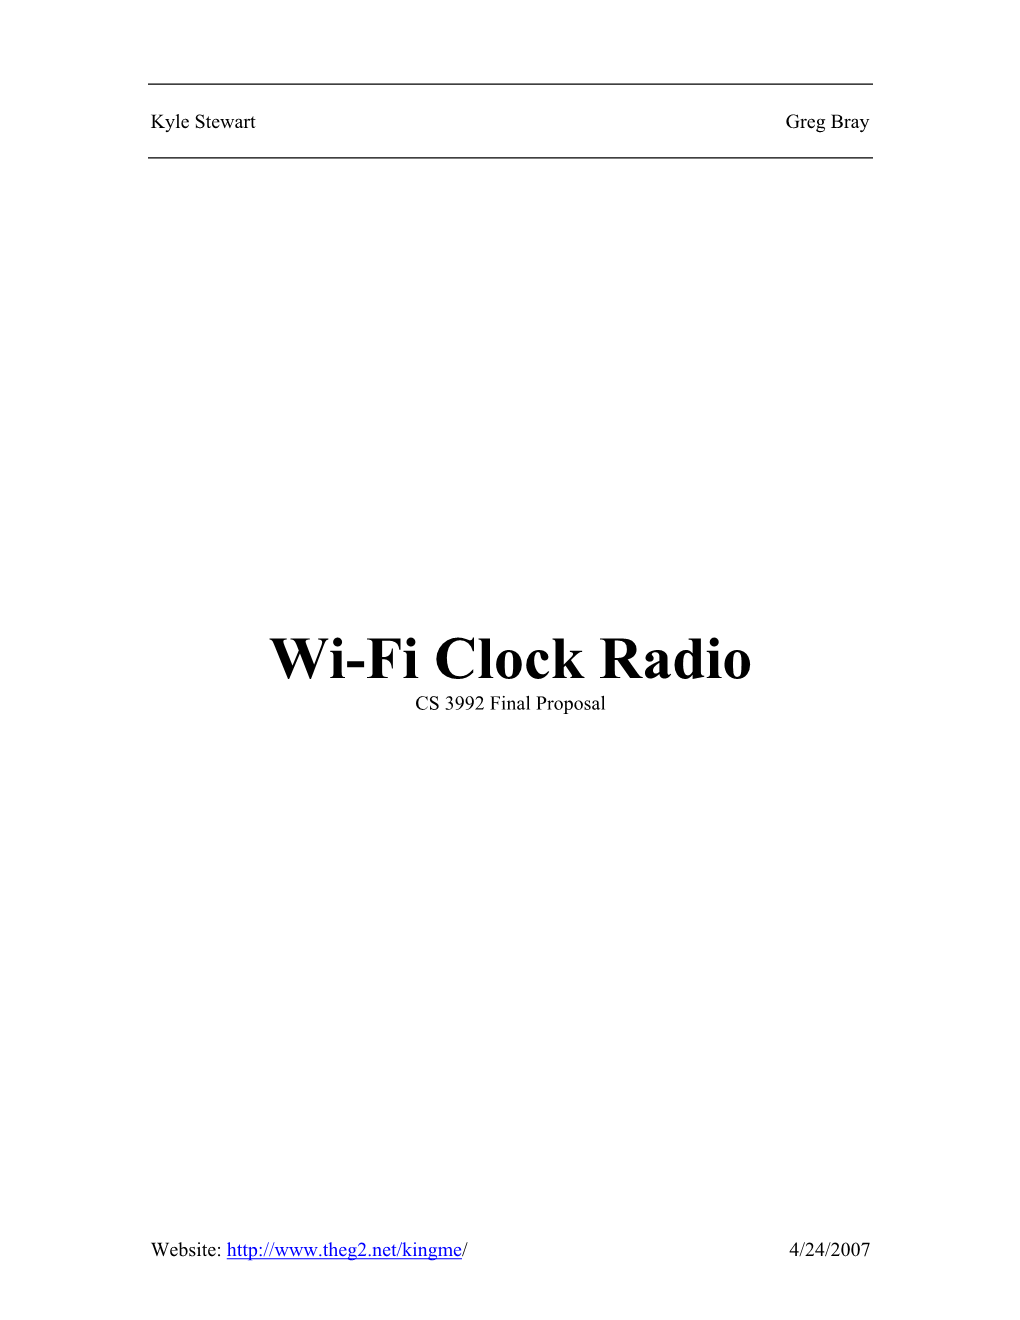 Wi-Fi Clock Radio CS 3992 Final Proposal